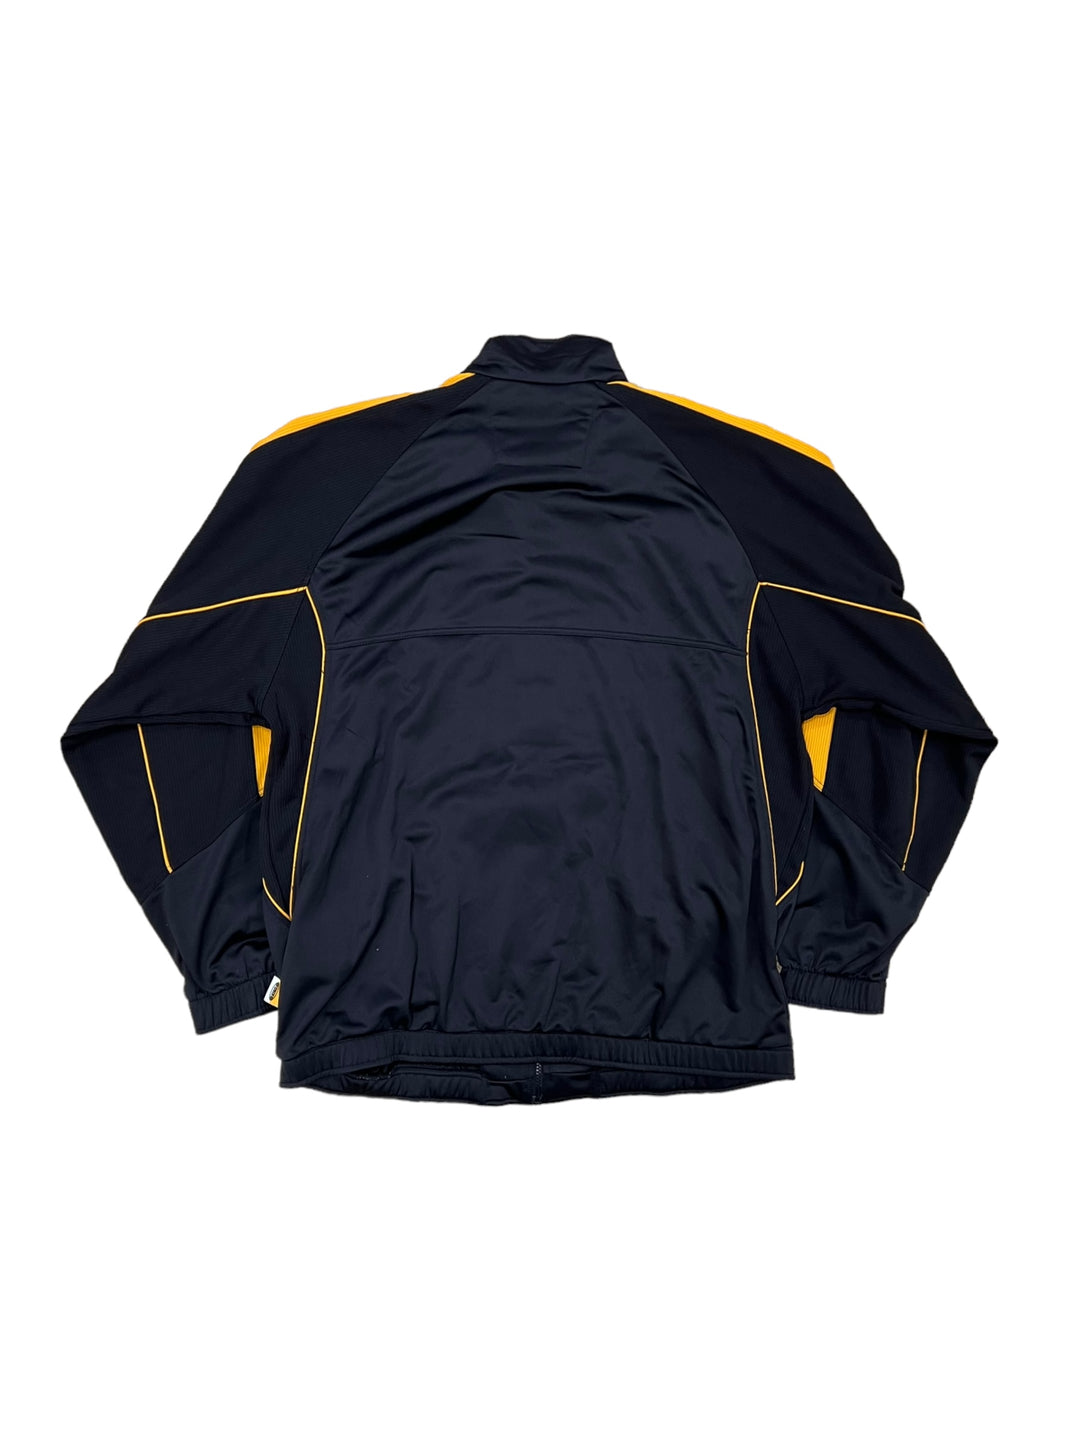 Puma King vintage jacket Men’s Extra Large